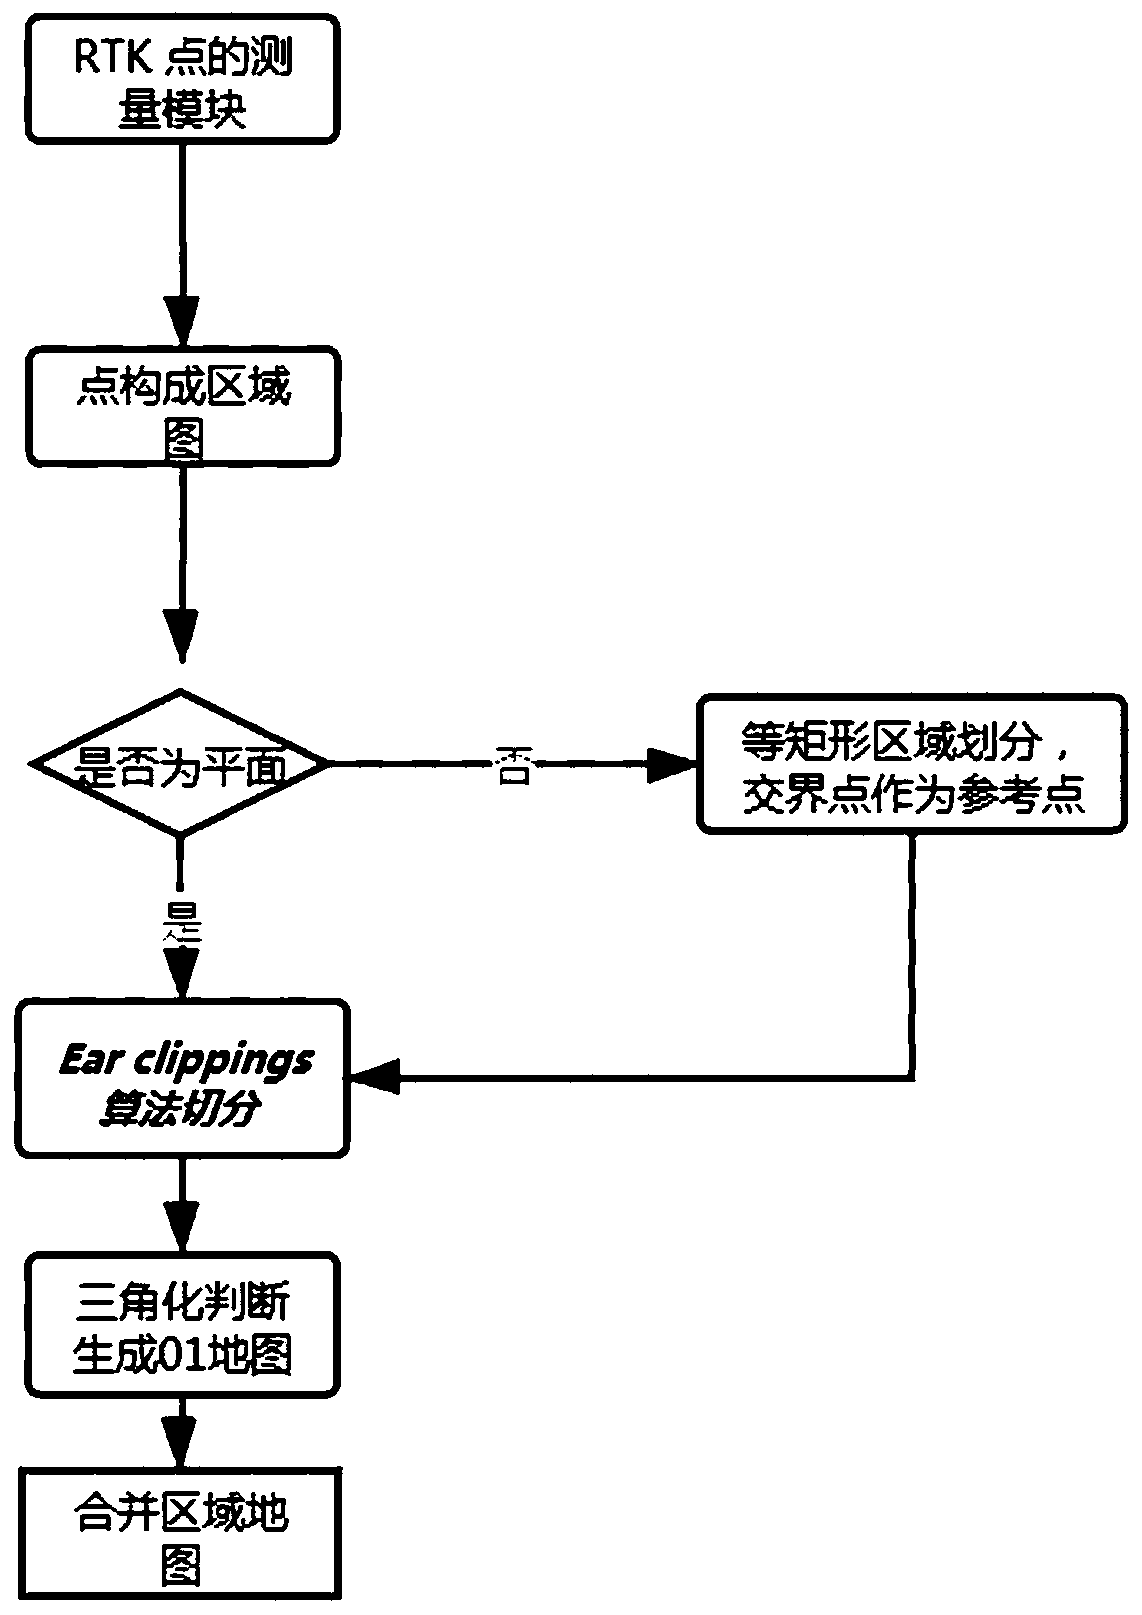 Map area processing method